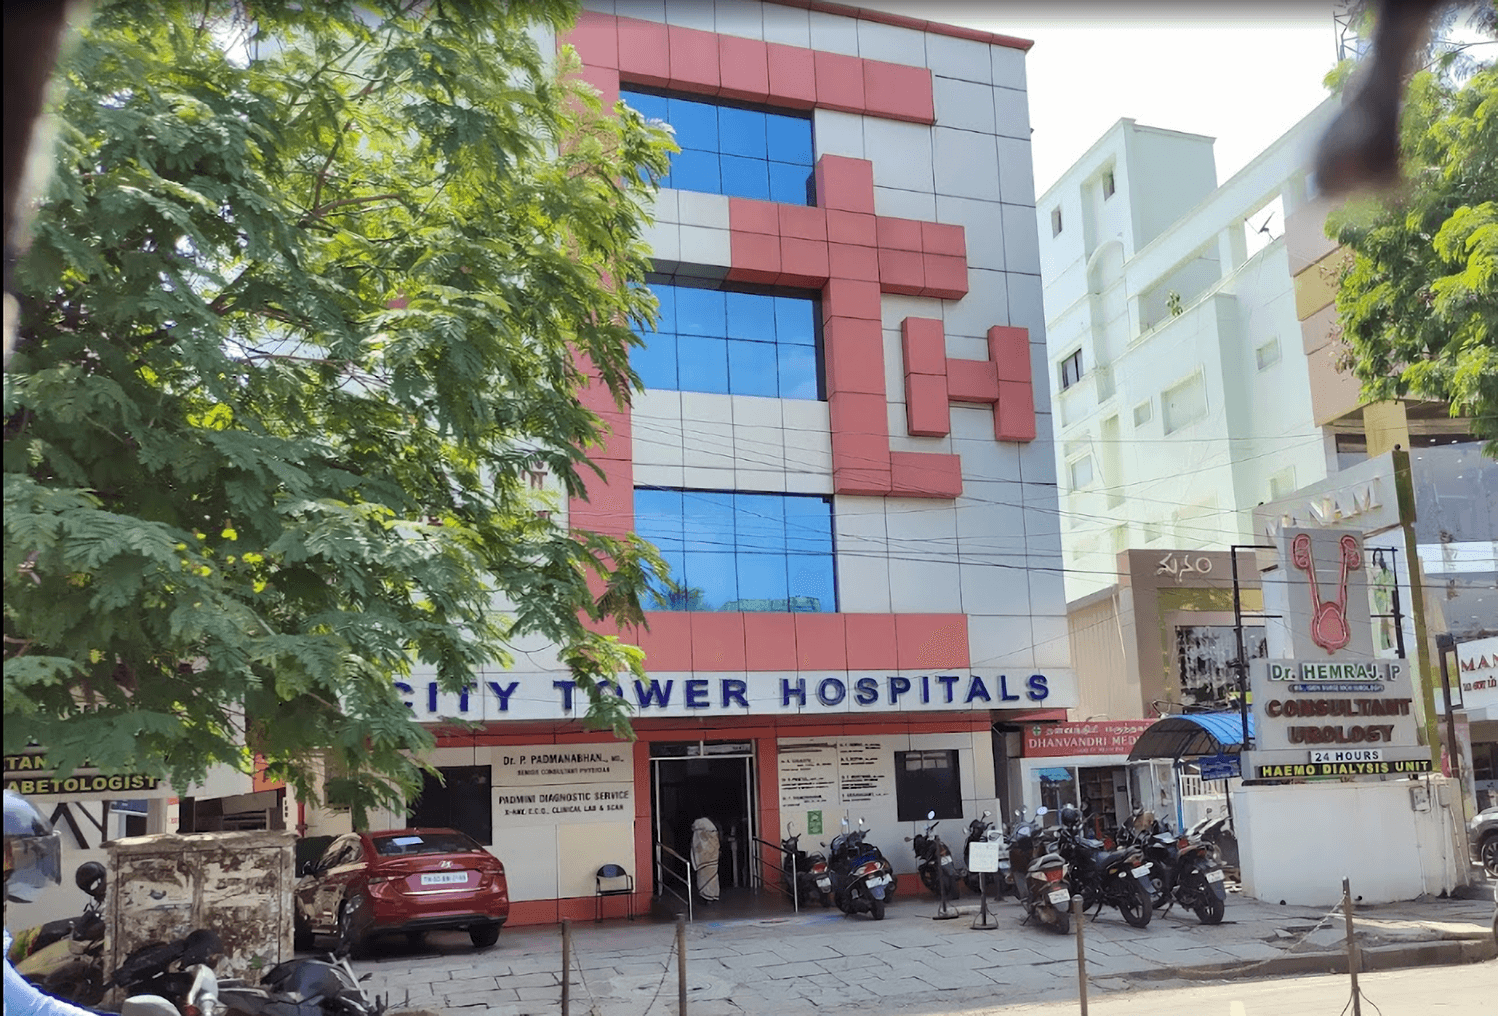 City Tower Hospital